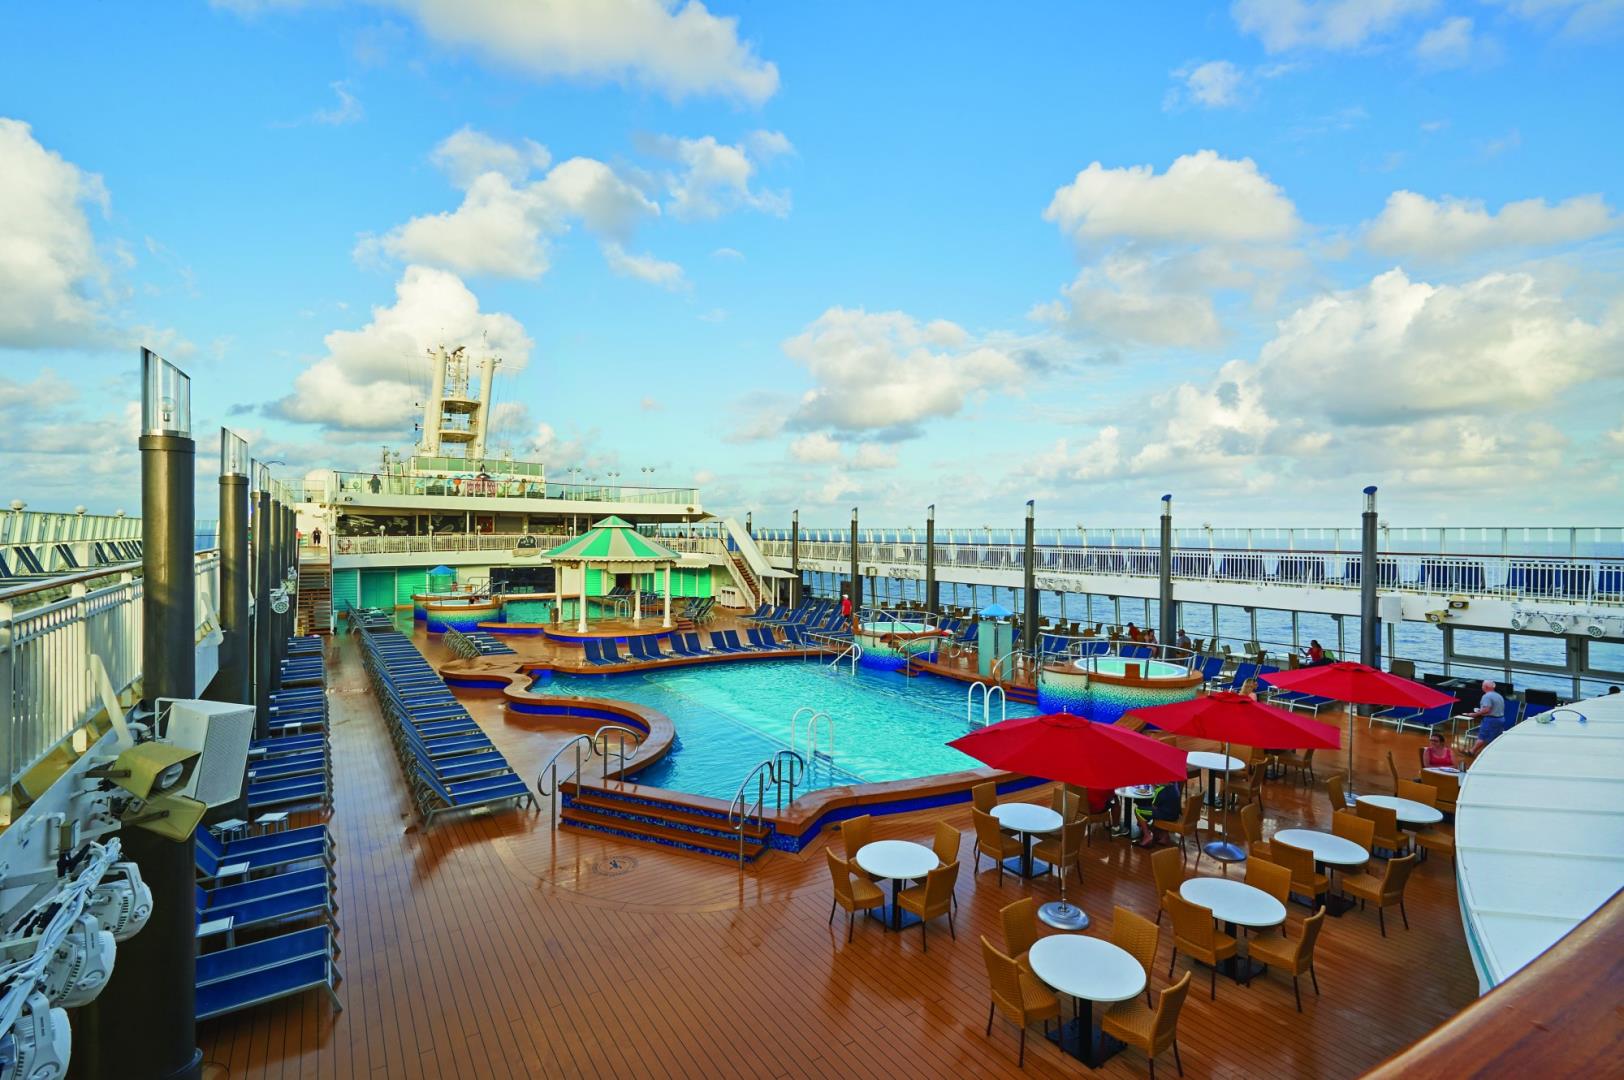 14-day Cruise to Transatlantic: Bahamas, Spain & Bermuda from Barcelona, Spain on Norwegian Pearl